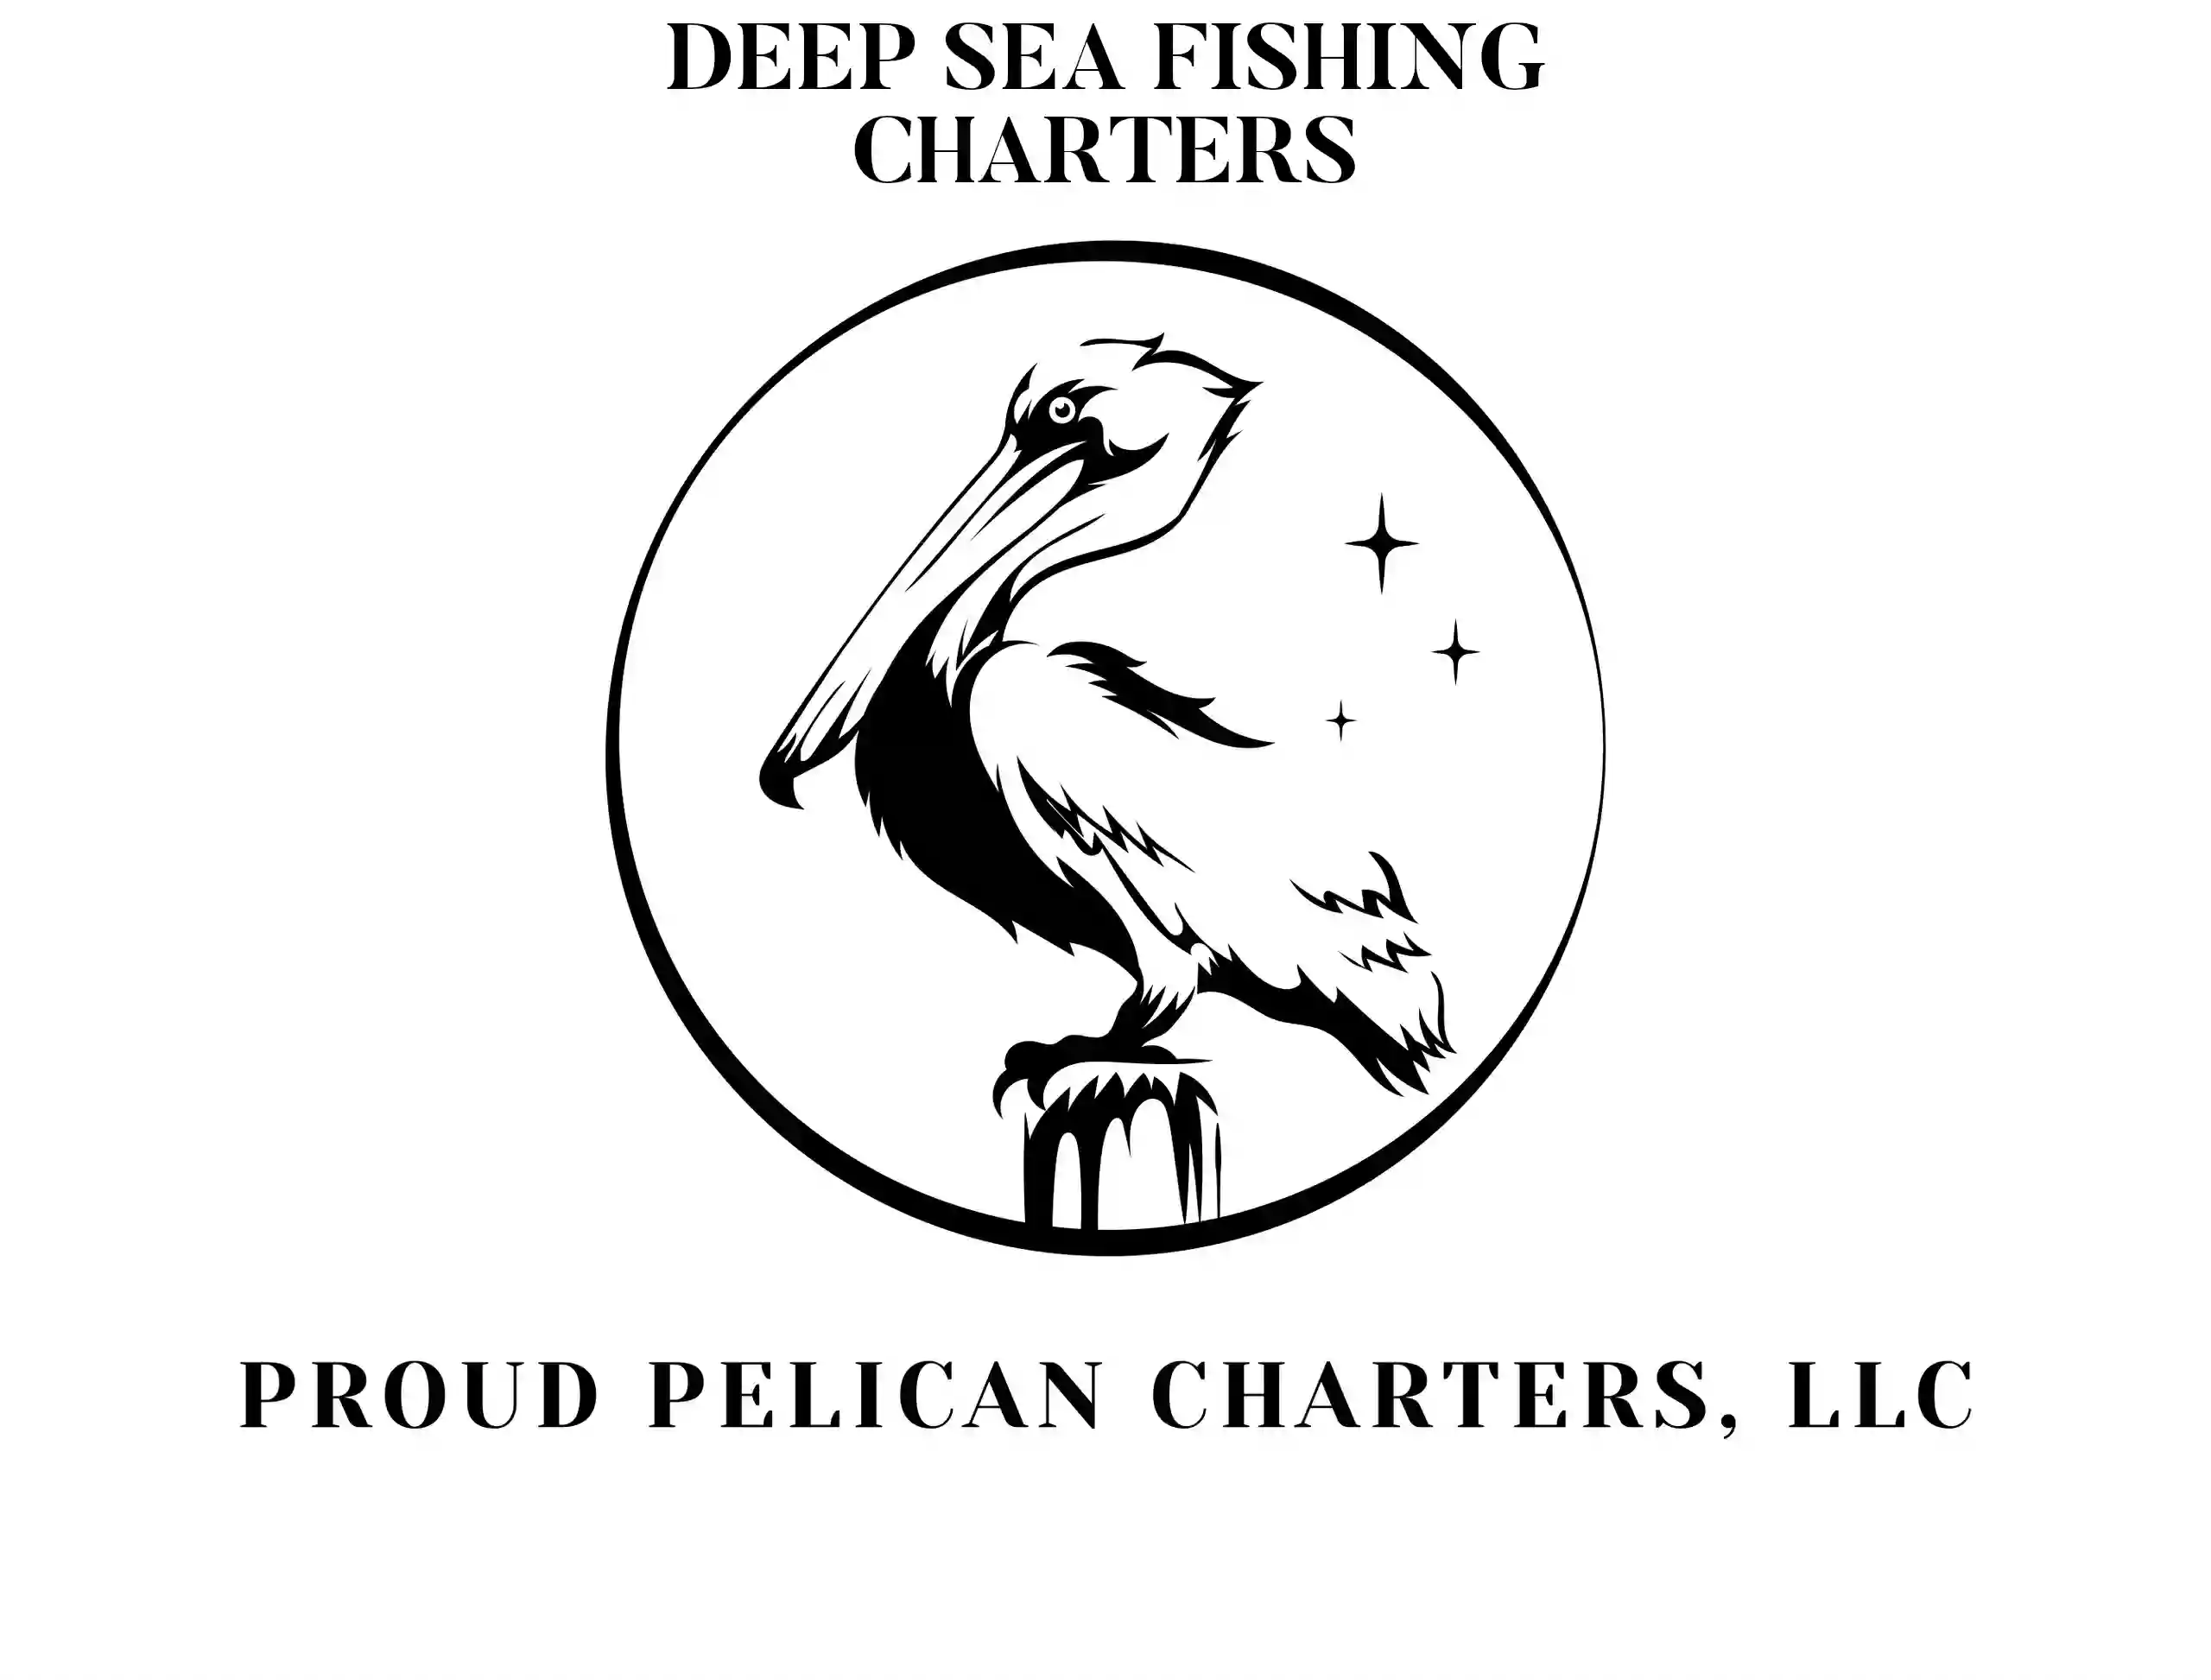 Proud Pelican Charters, LLC